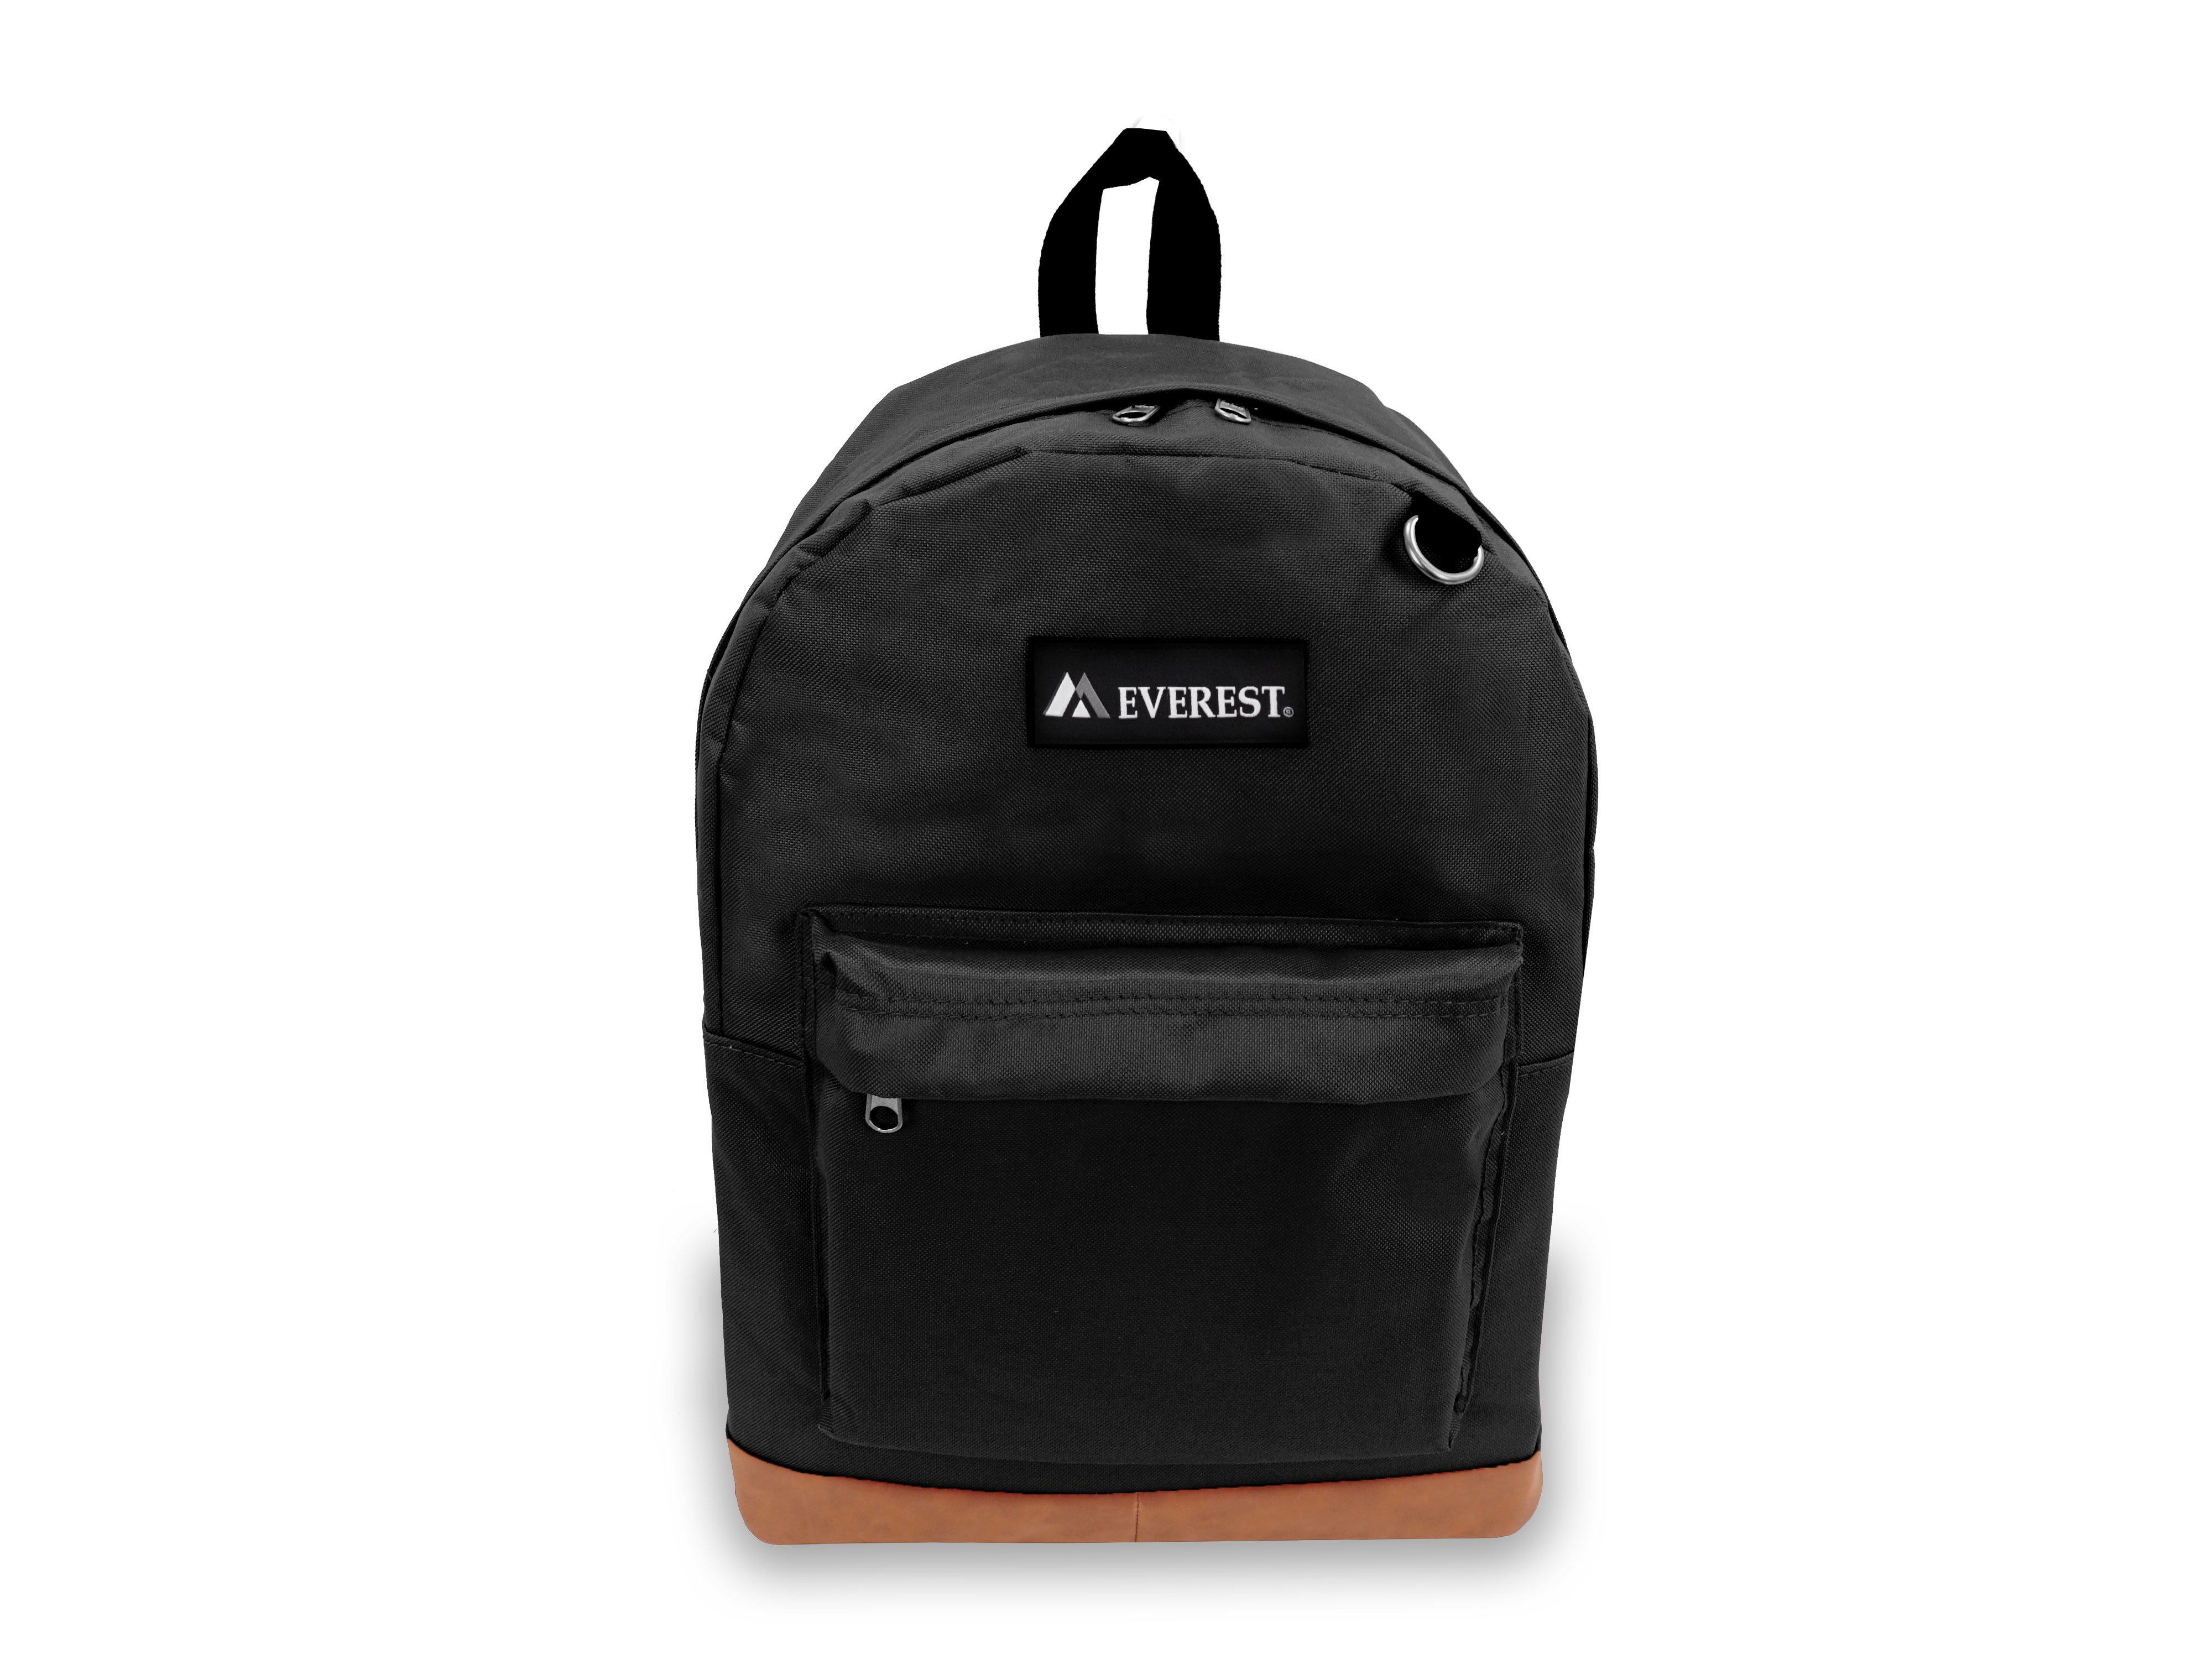 Everest 17" Suede Bottom Backpack, Black All Ages, Unisex 1045GL-BK, Carrier and Shoulder Book Bag for School, Work, Sports, and Travel - image 1 of 4